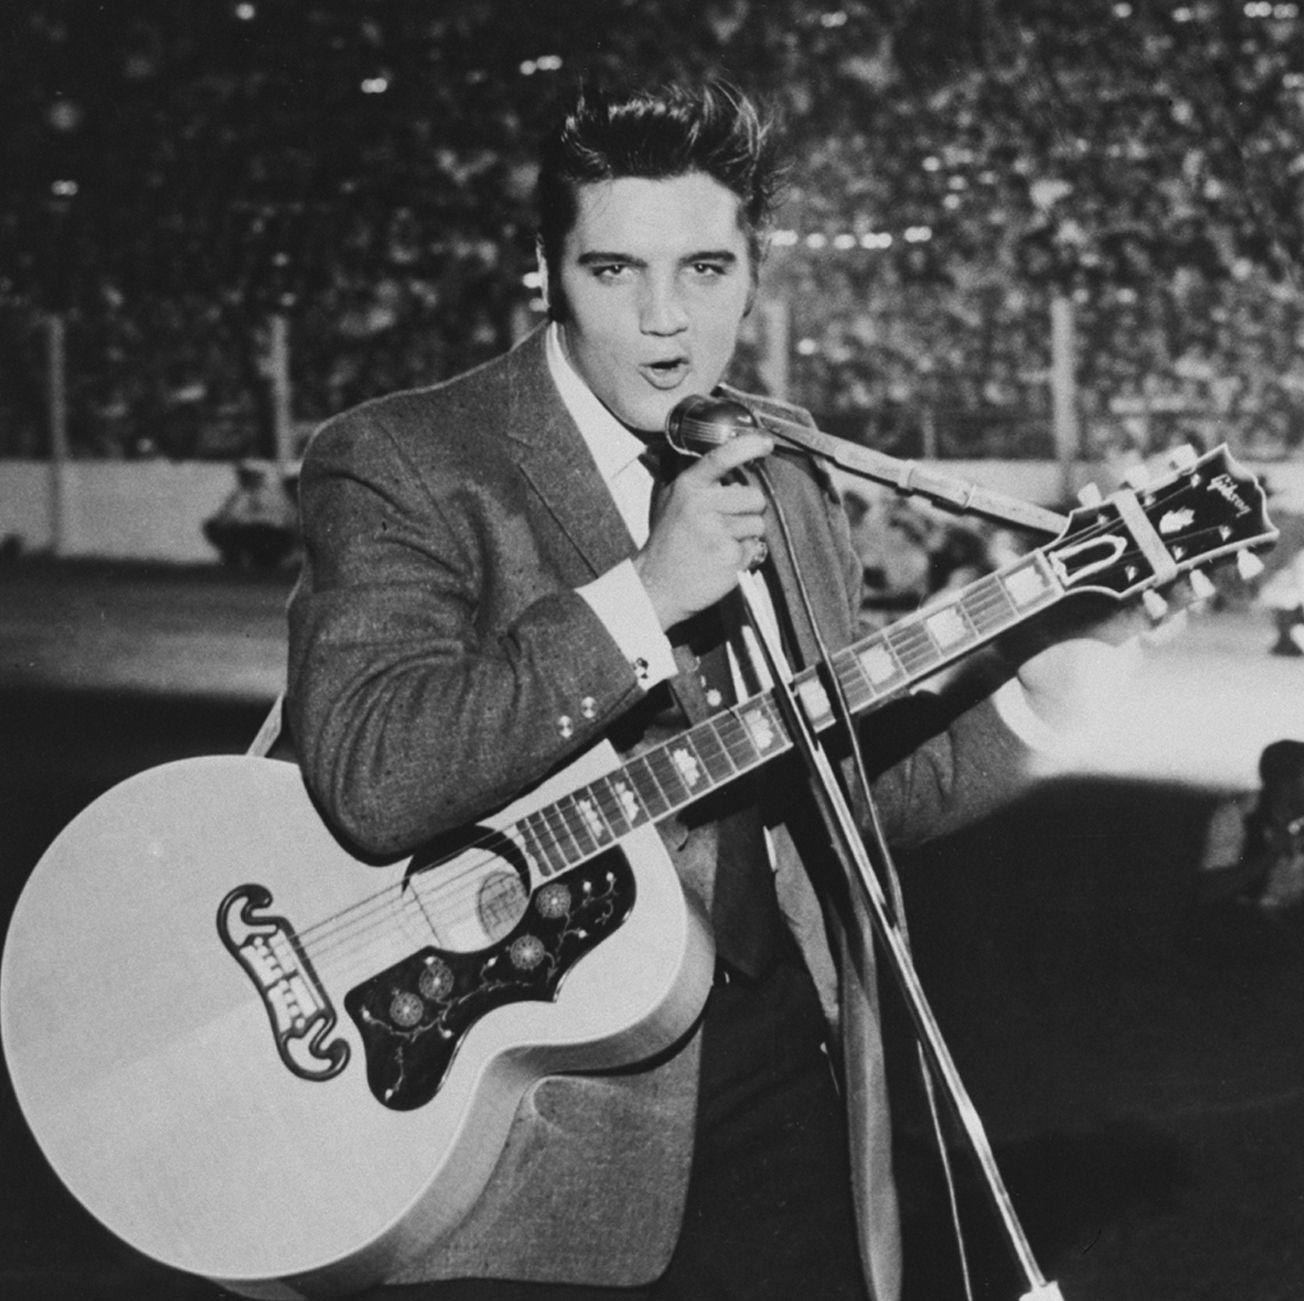 455. Viva Las Vegas ~ Elvis Presley (cover)